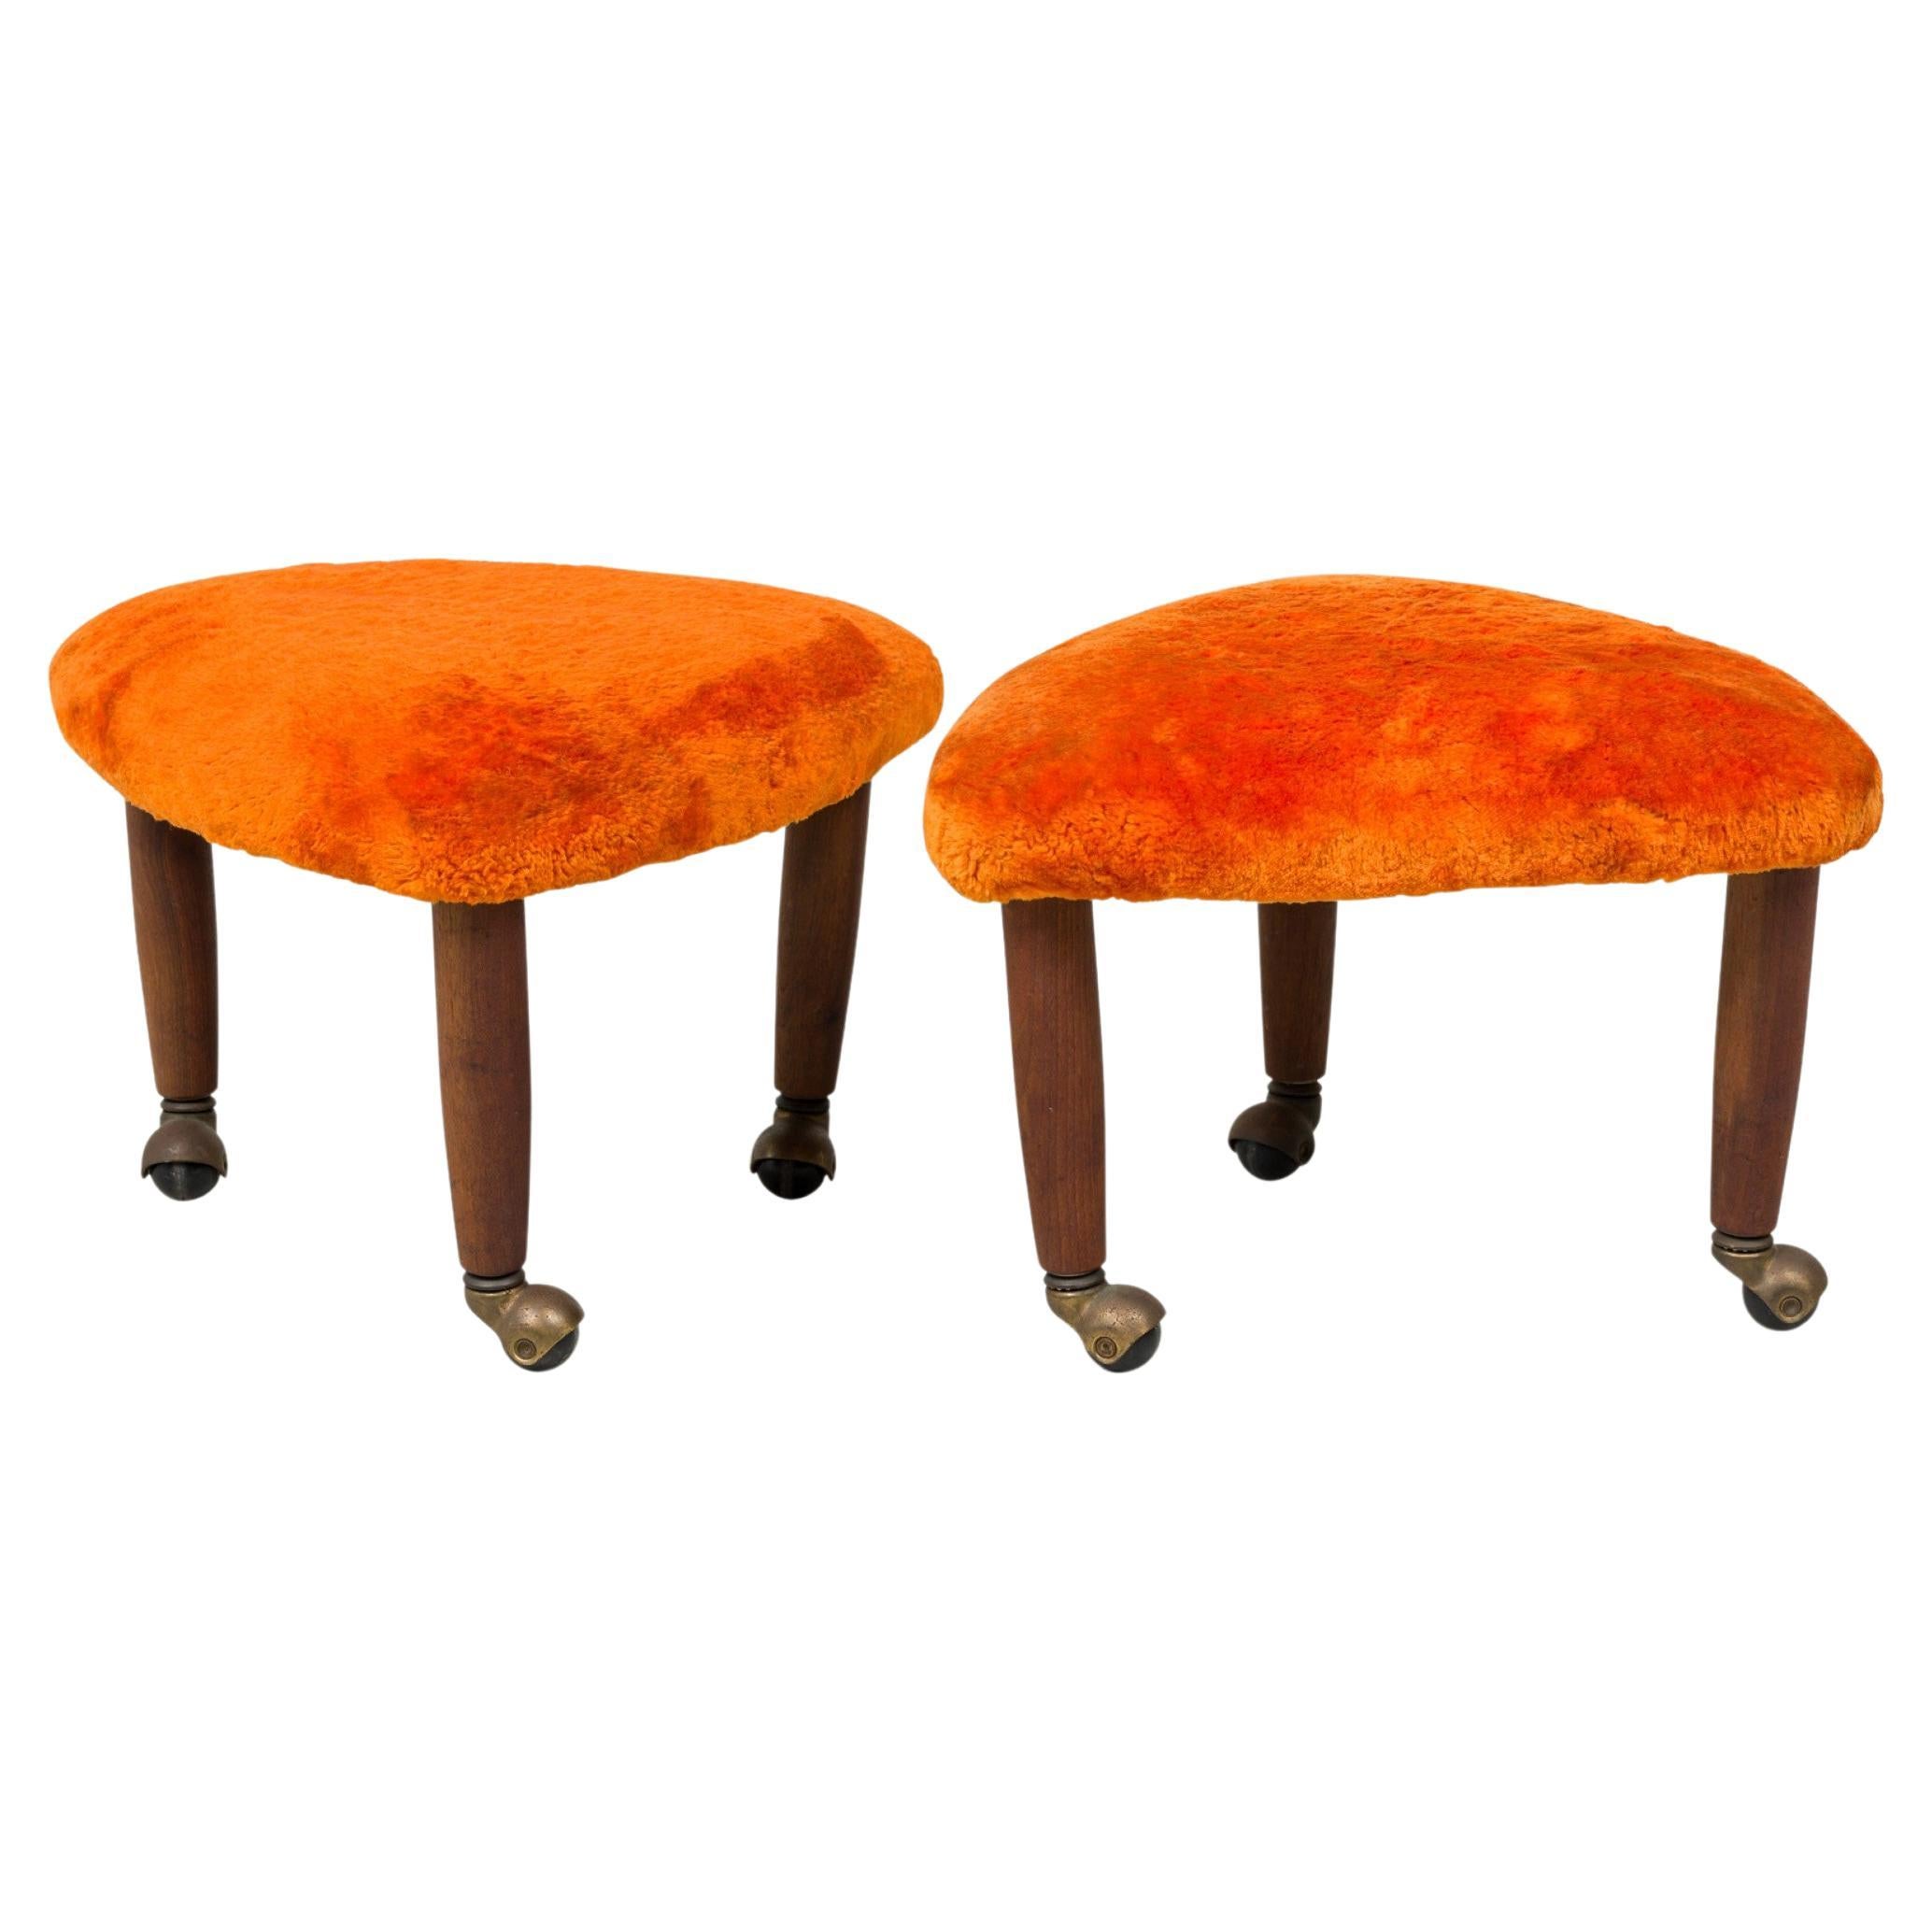 Pair of Midcentury Italian Modern Triangular Orange Upholstered Footstools